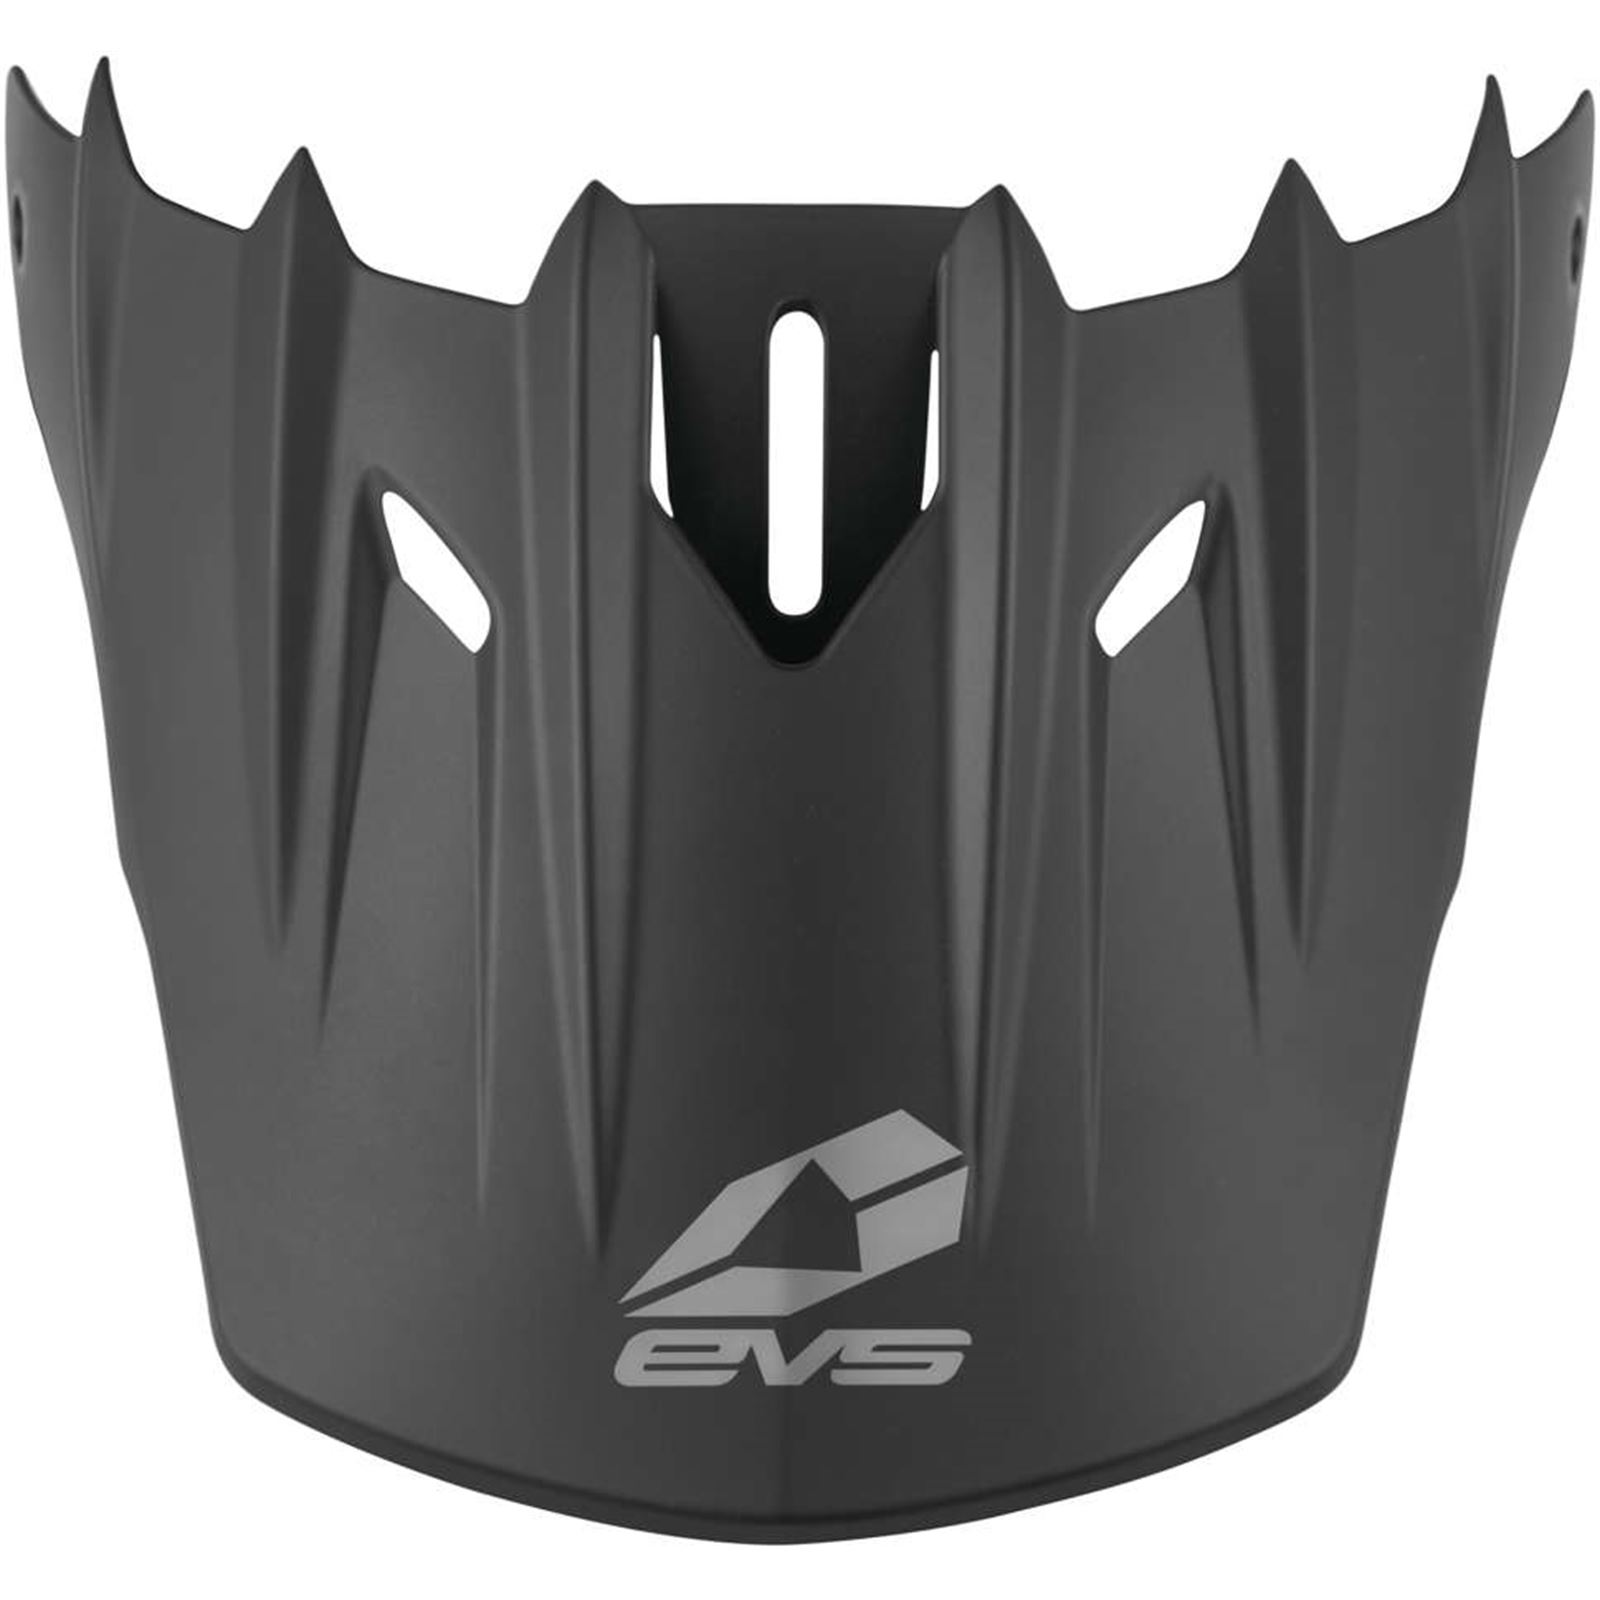  EVS SB05 Unisex-Adult Off-Road Motorcycle Shoulder Brace - Black/Small  : Automotive